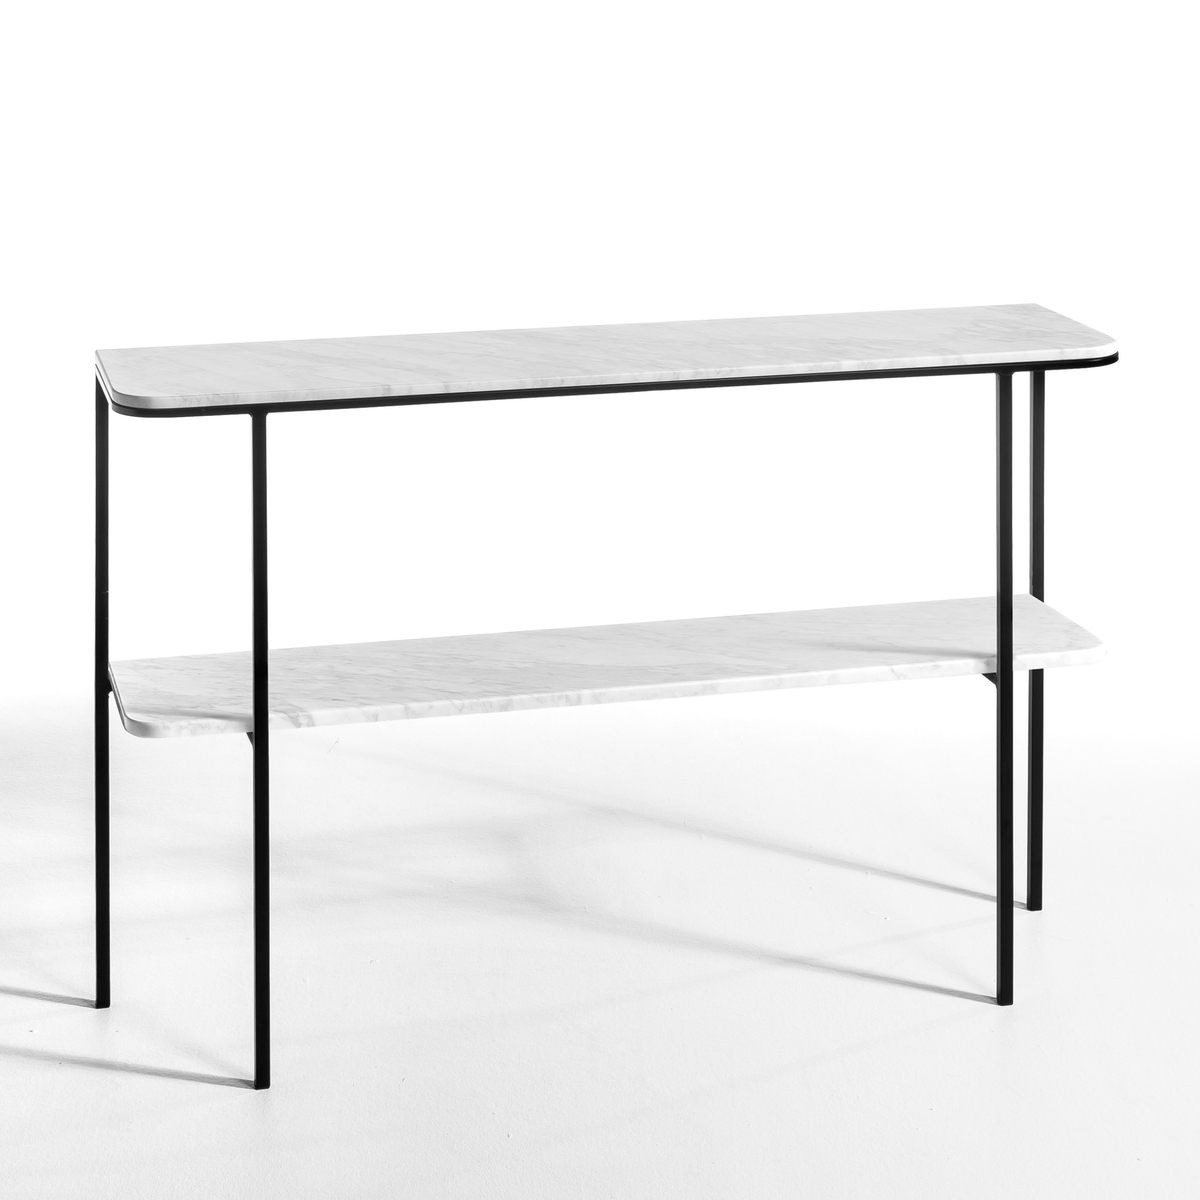 Honorianne Console Table, design by E. Gallina